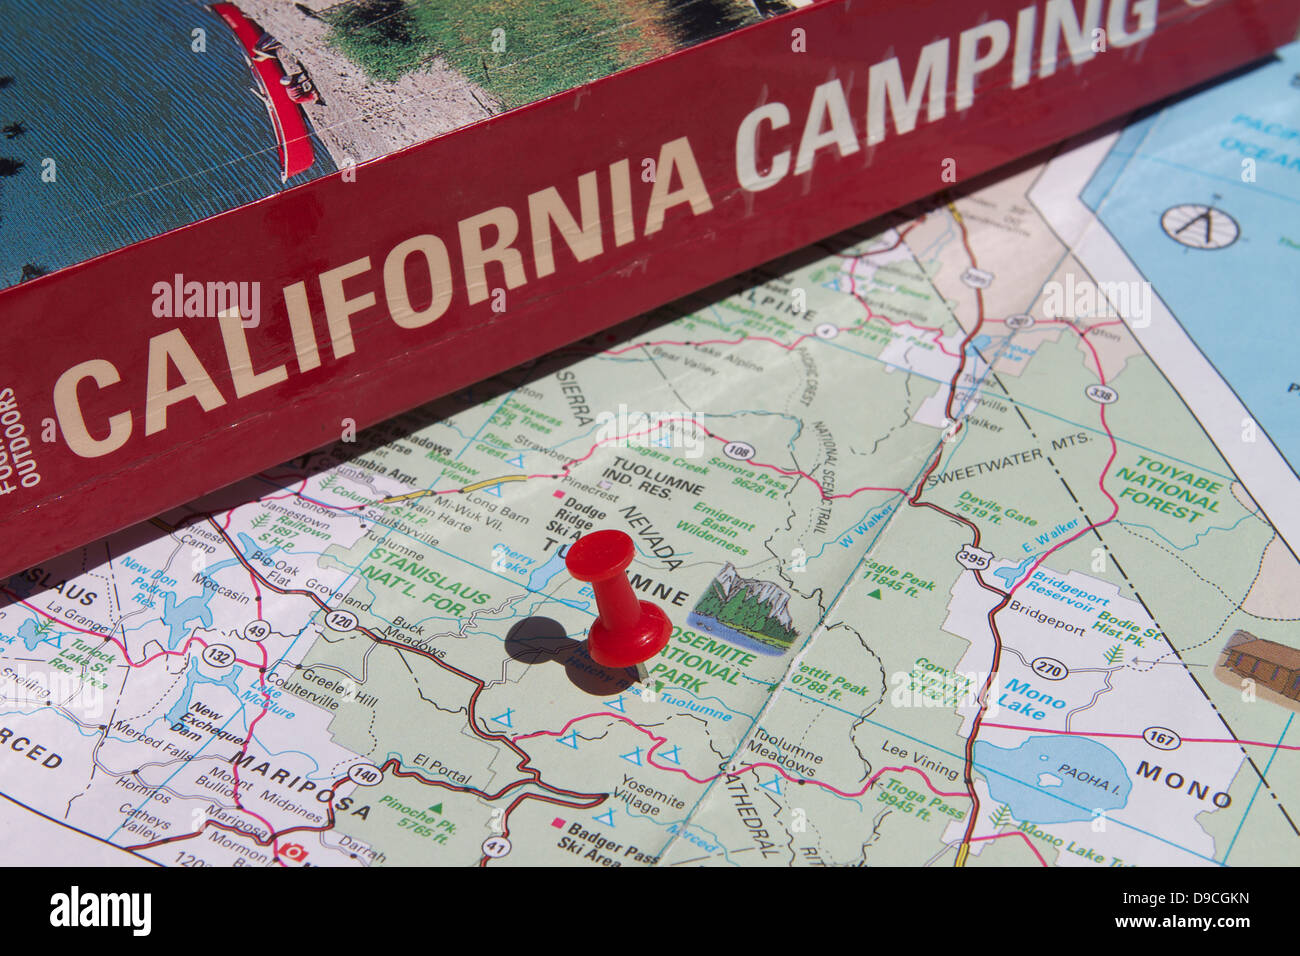 Una chincheta marcando Yosemite National Park en un mapa de California junto a un libro de Camping California Foto de stock